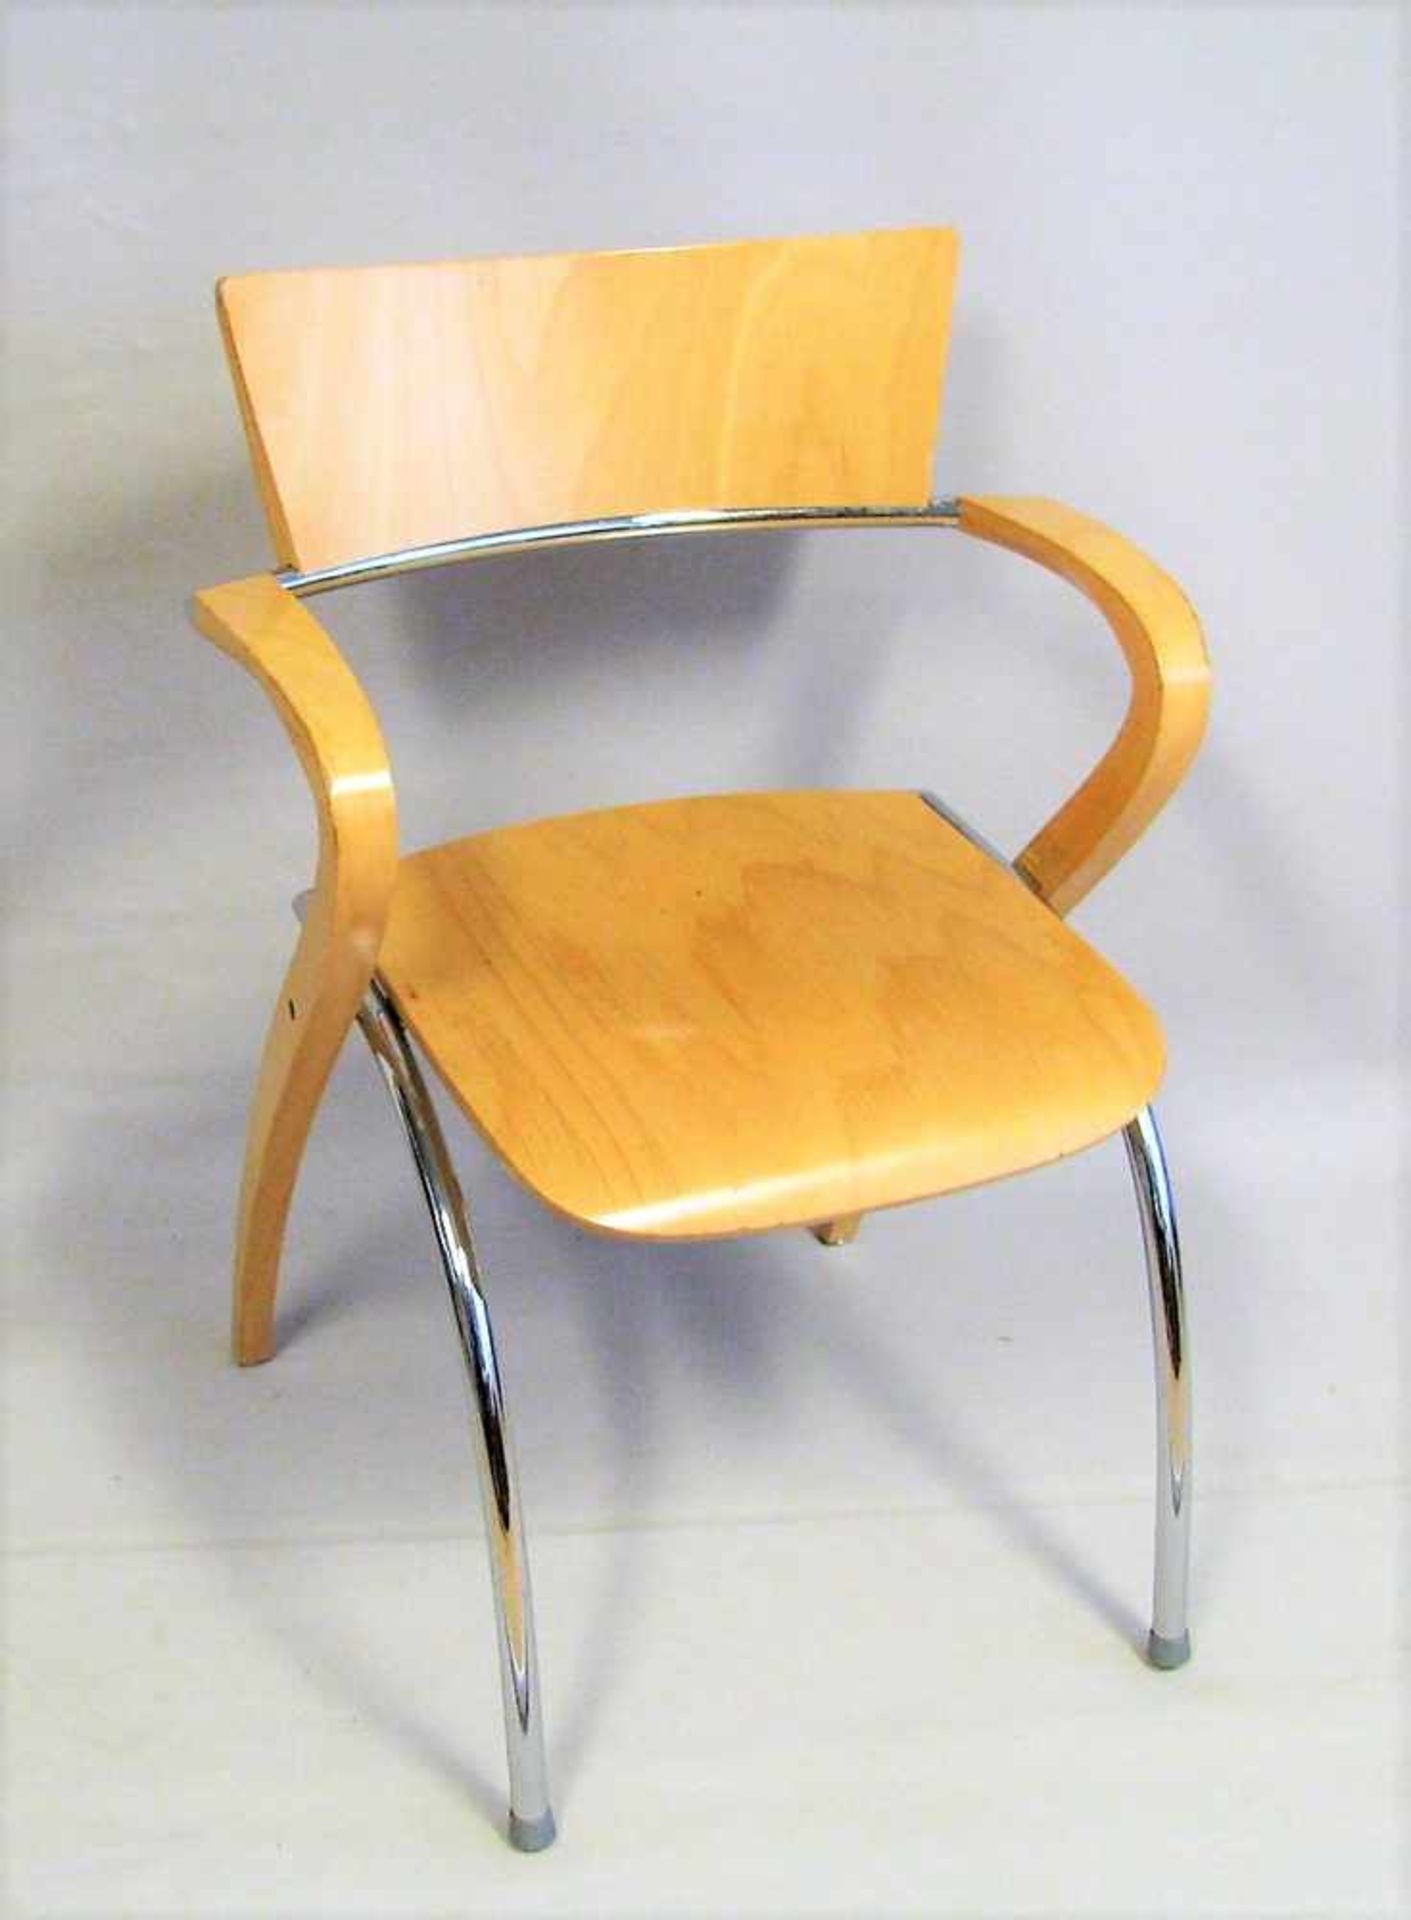 Designer-Armlehnstuhl, Holz und Chrom, 79 x 60 x 55 cm.